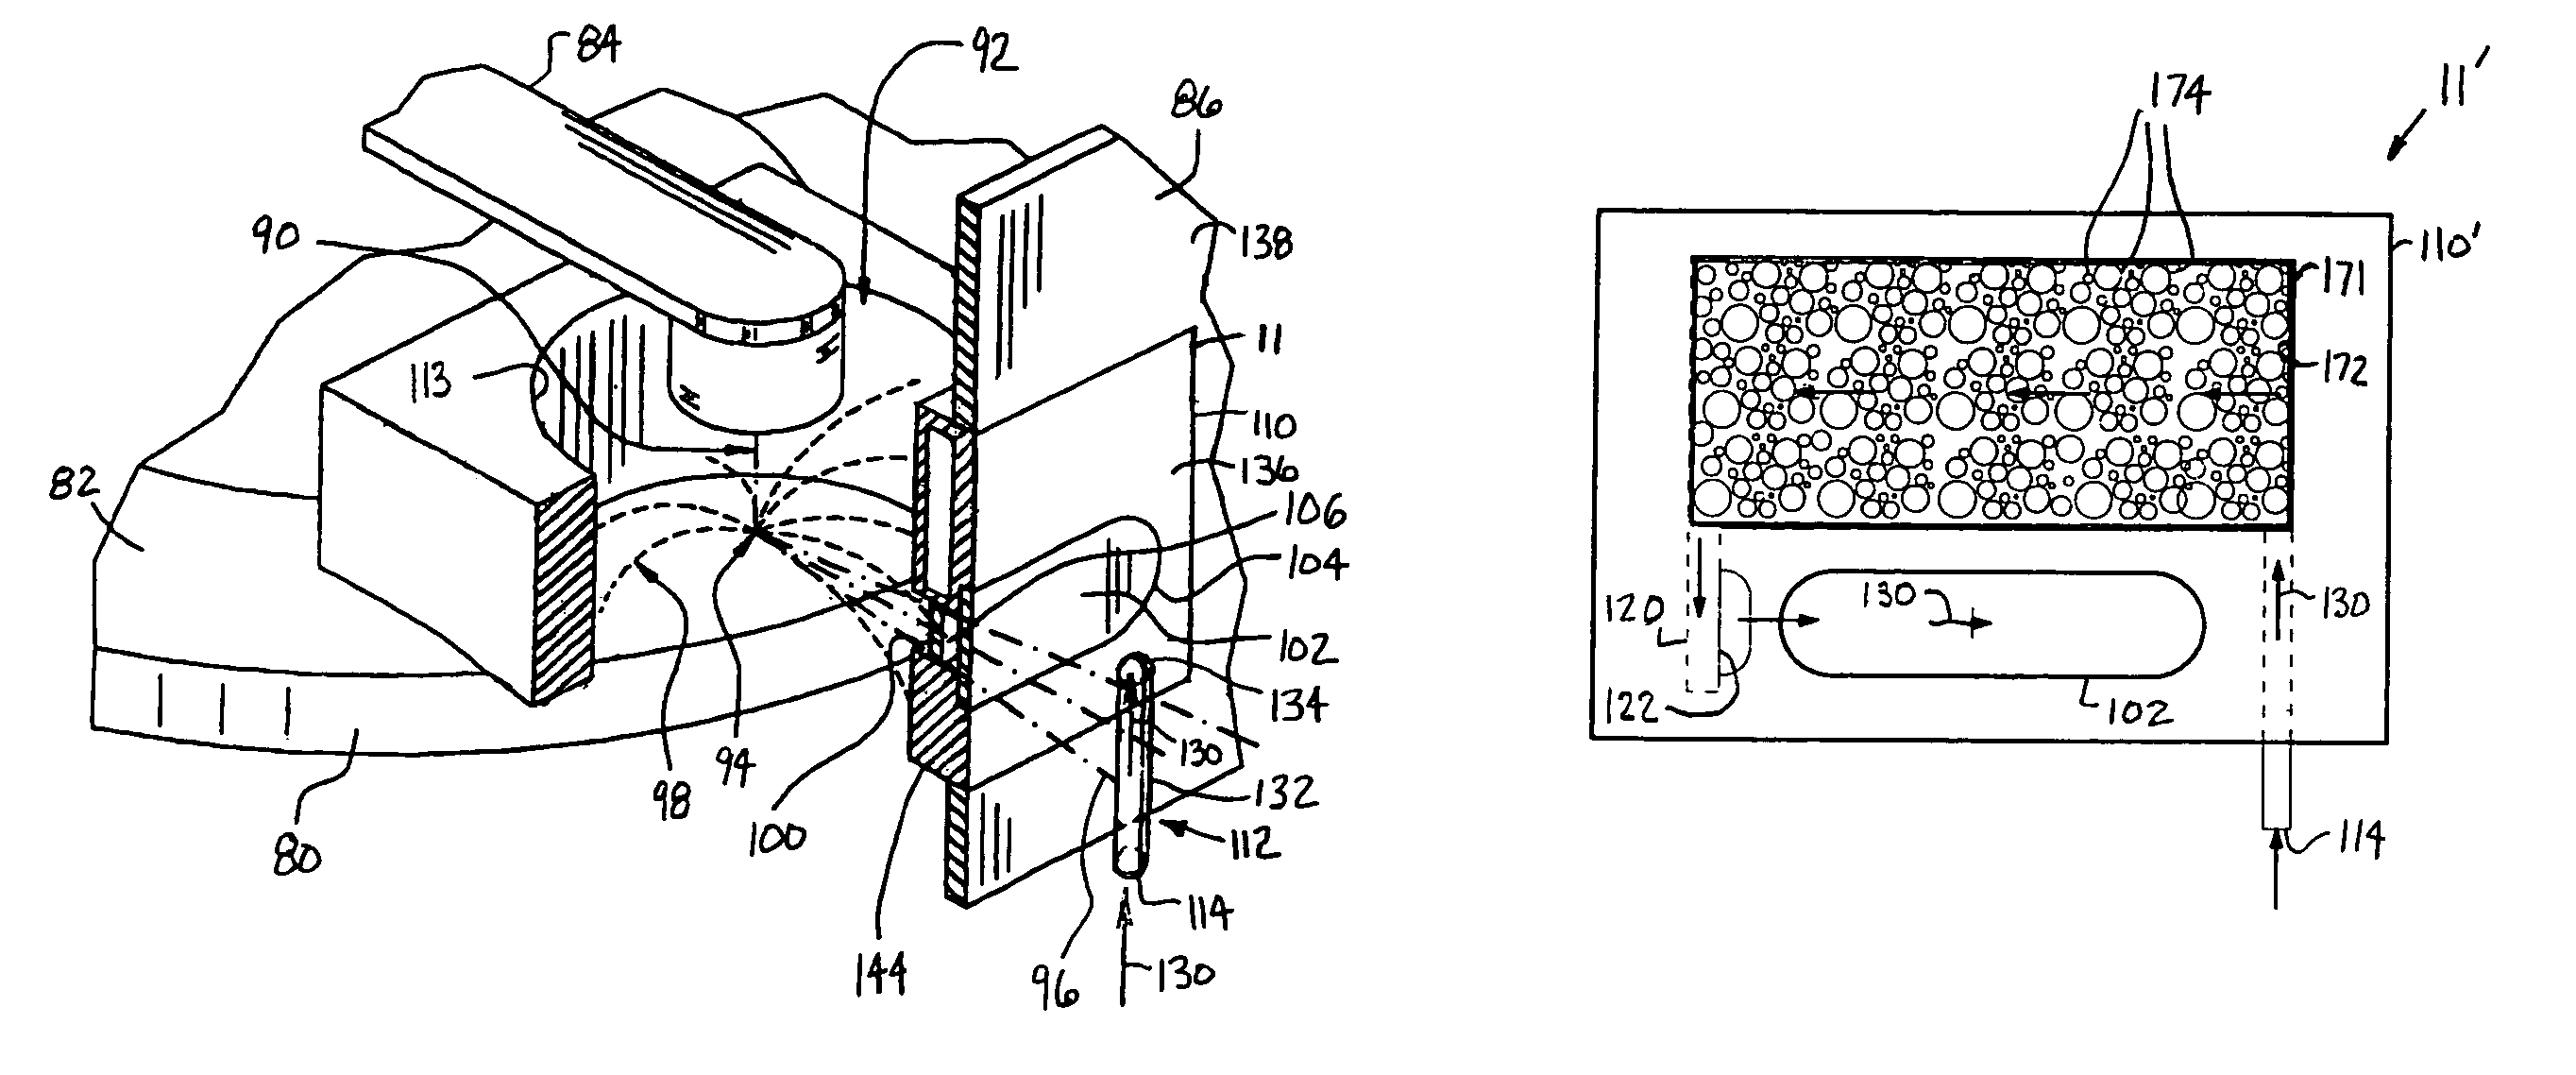 X-ray tube window cooling apparatus